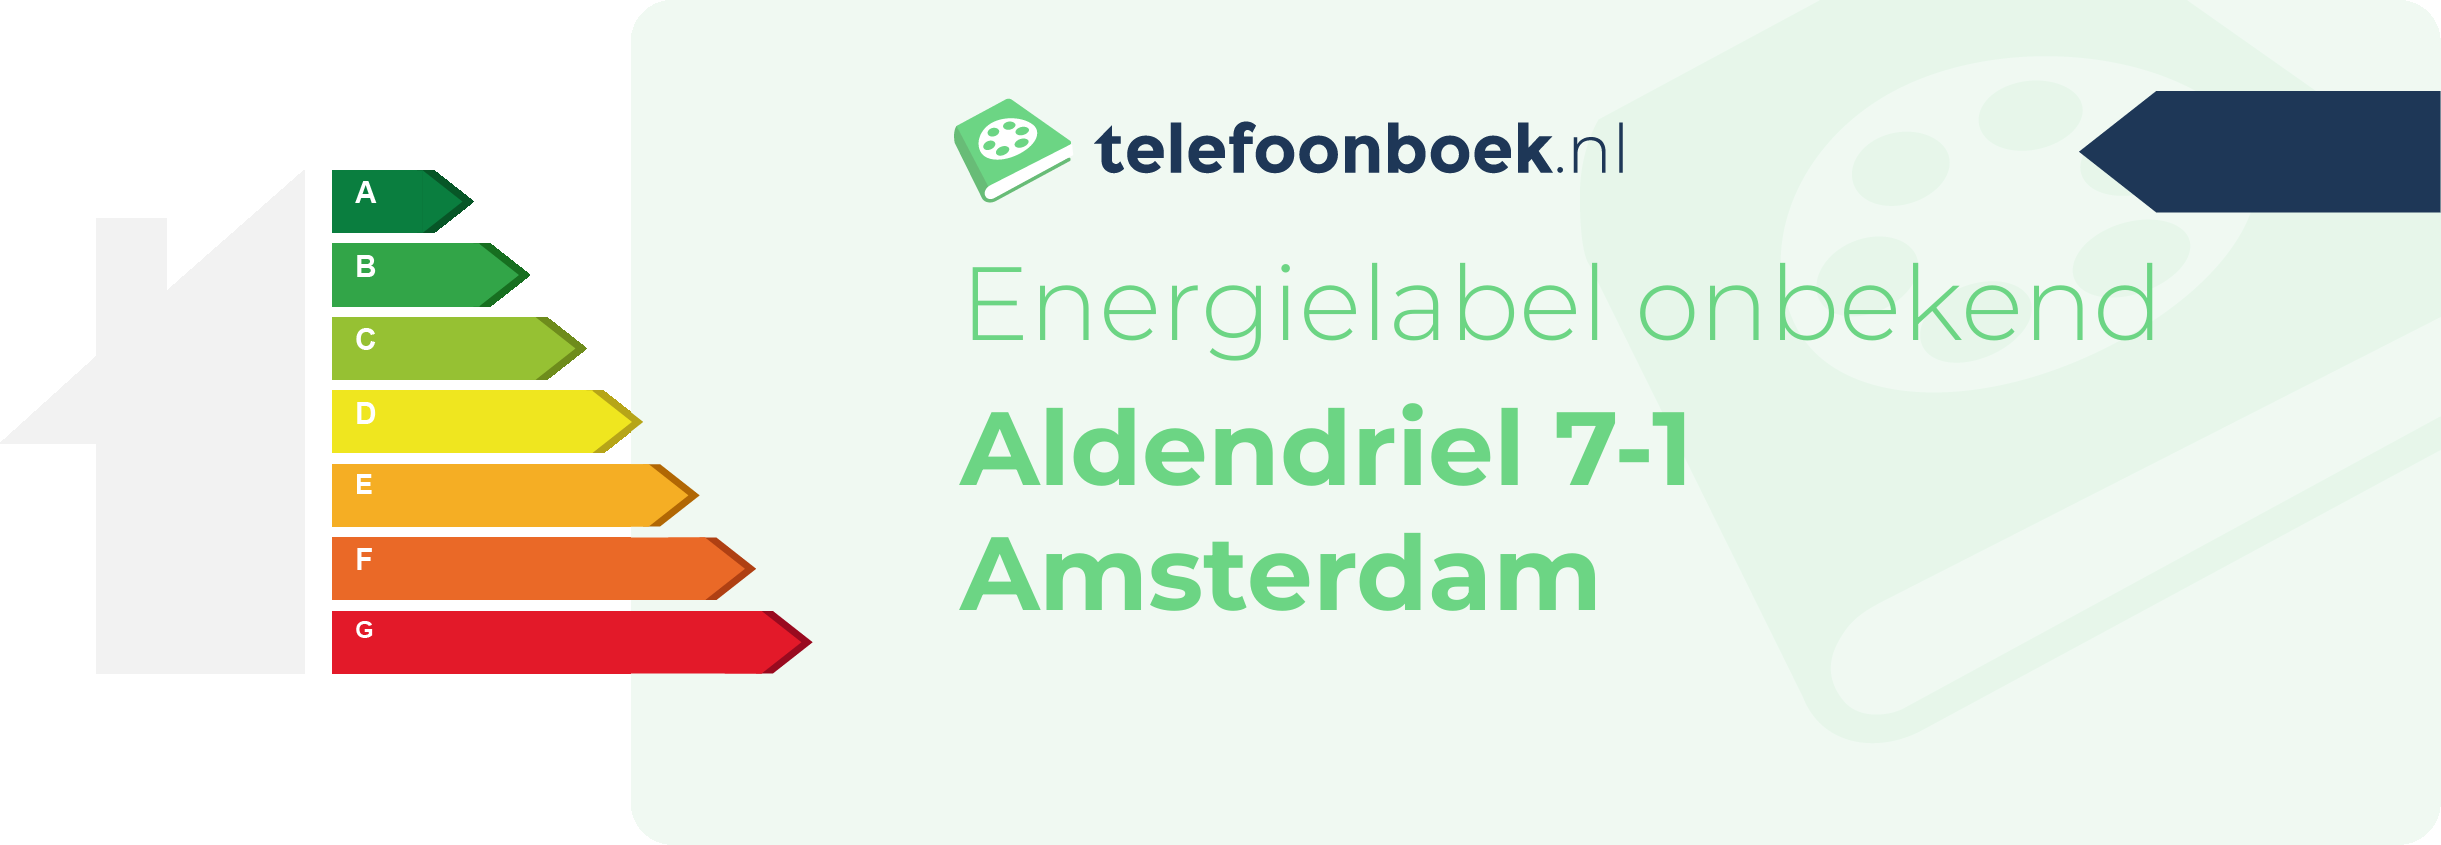 Energielabel Aldendriel 7-1 Amsterdam